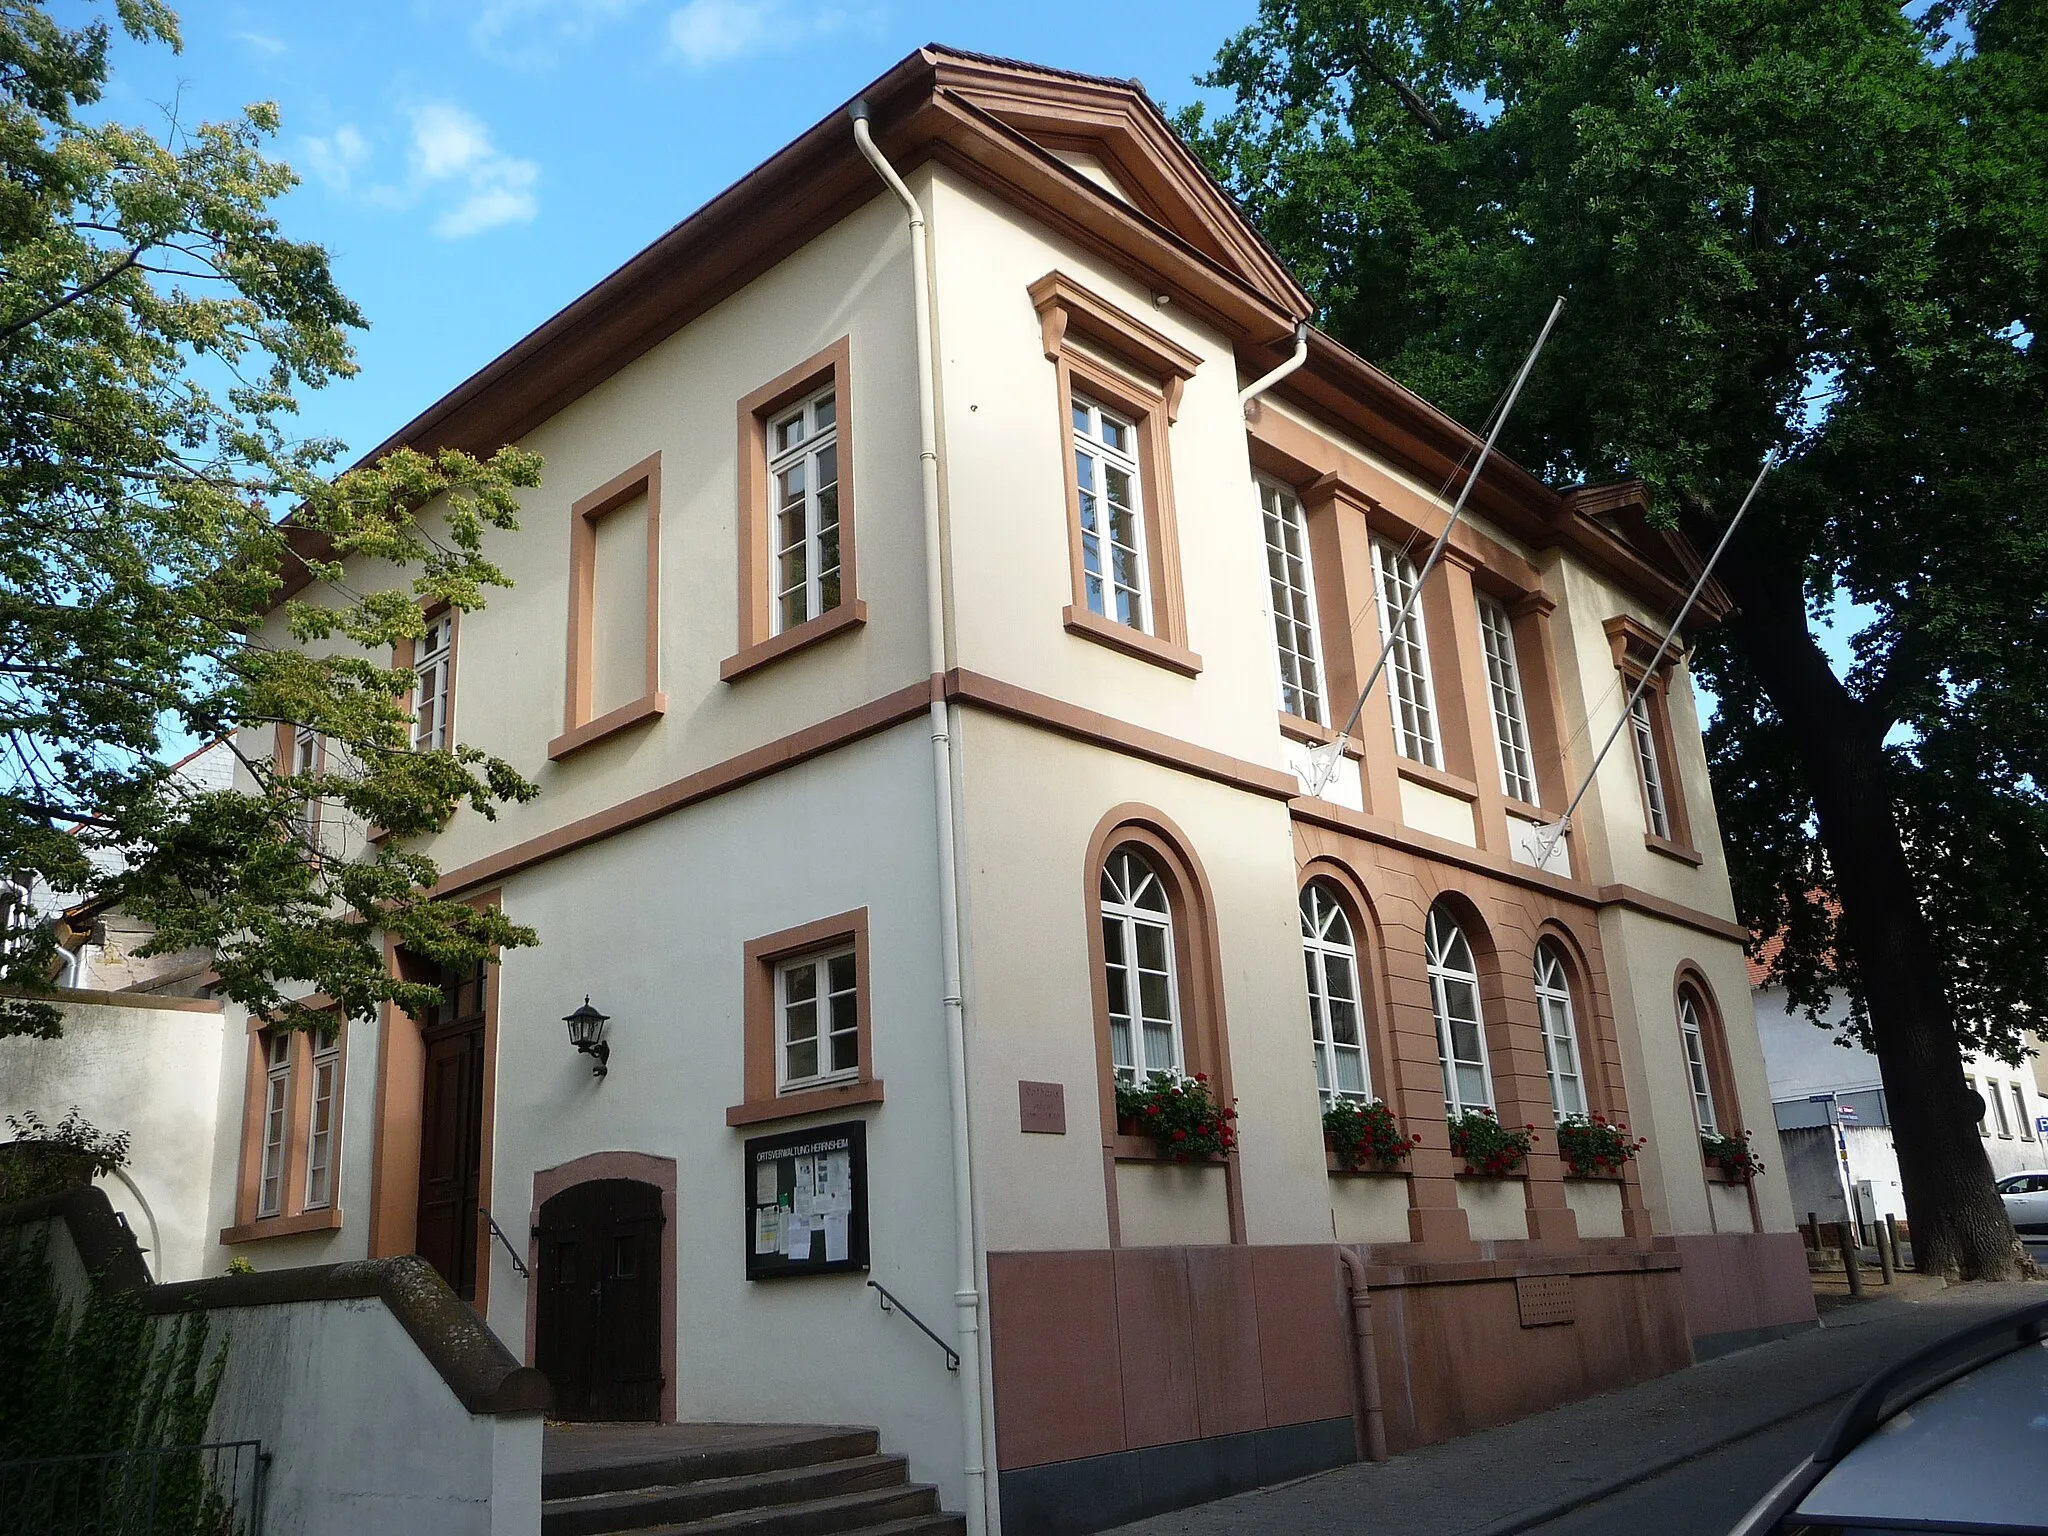 Photo showing: Rathaus